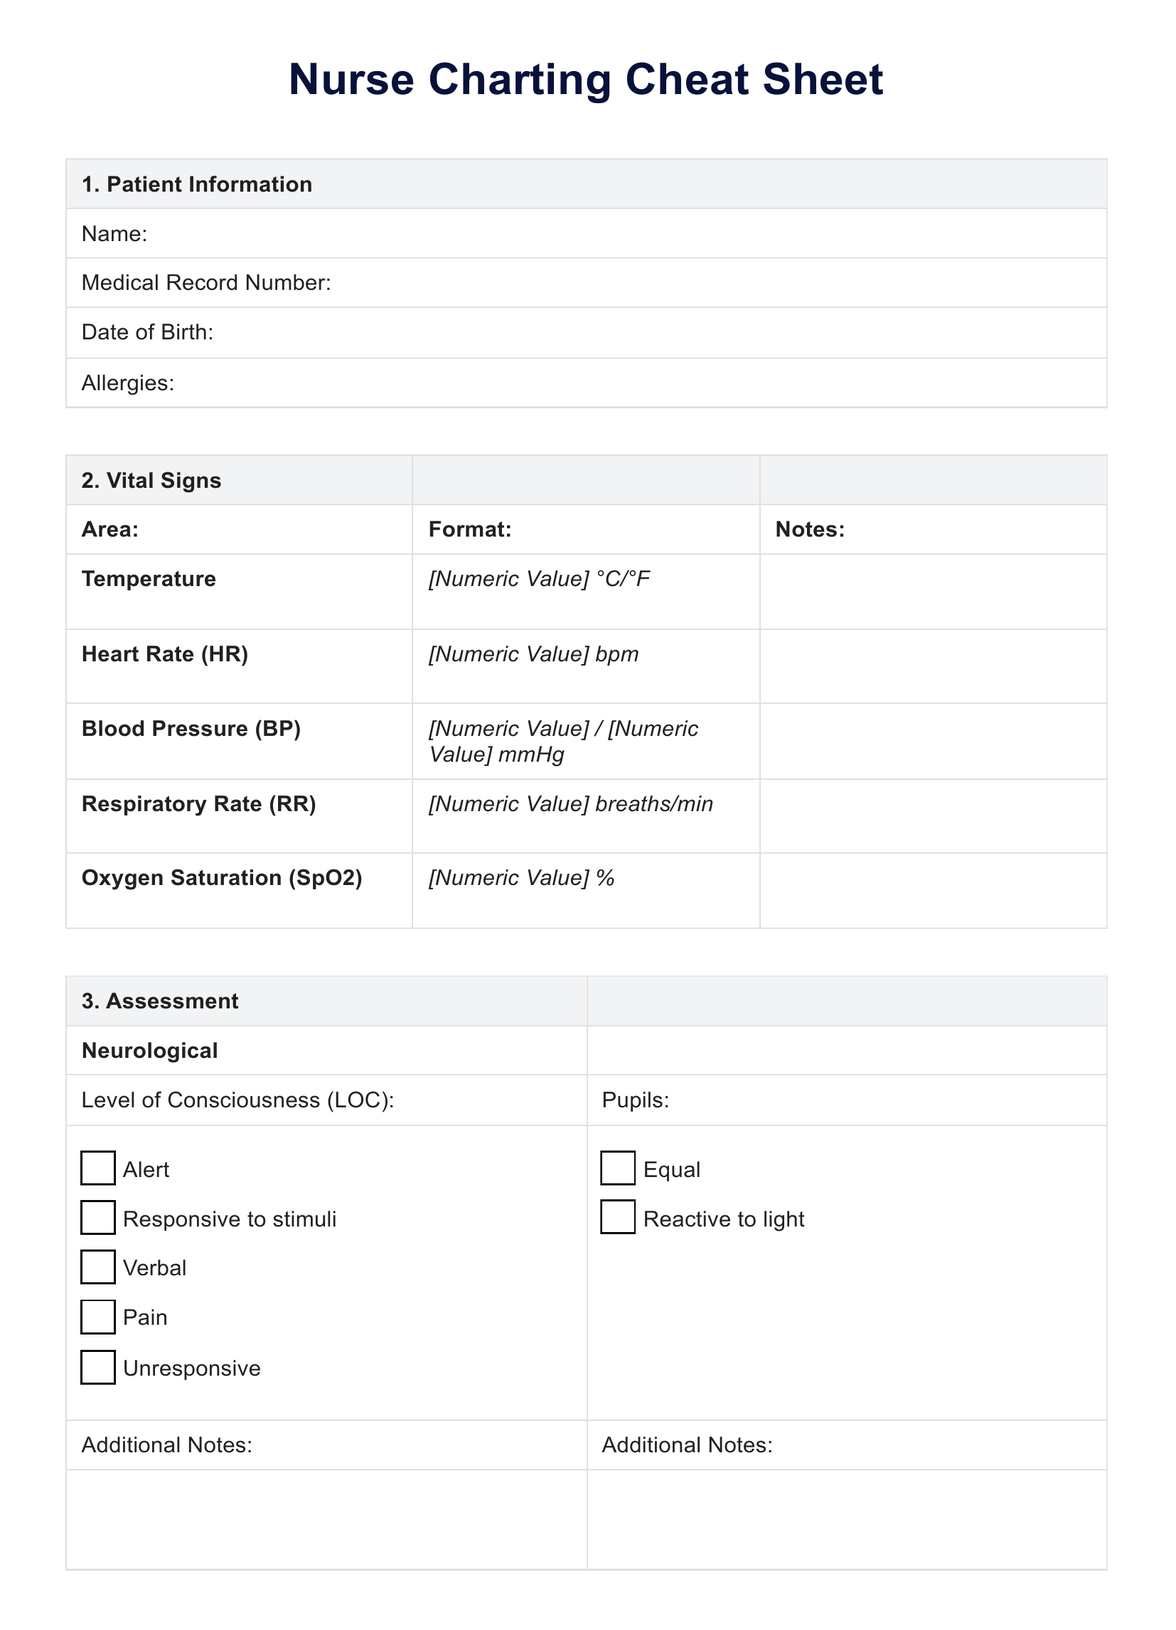 Nurse Charting Cheat Sheet PDF Example